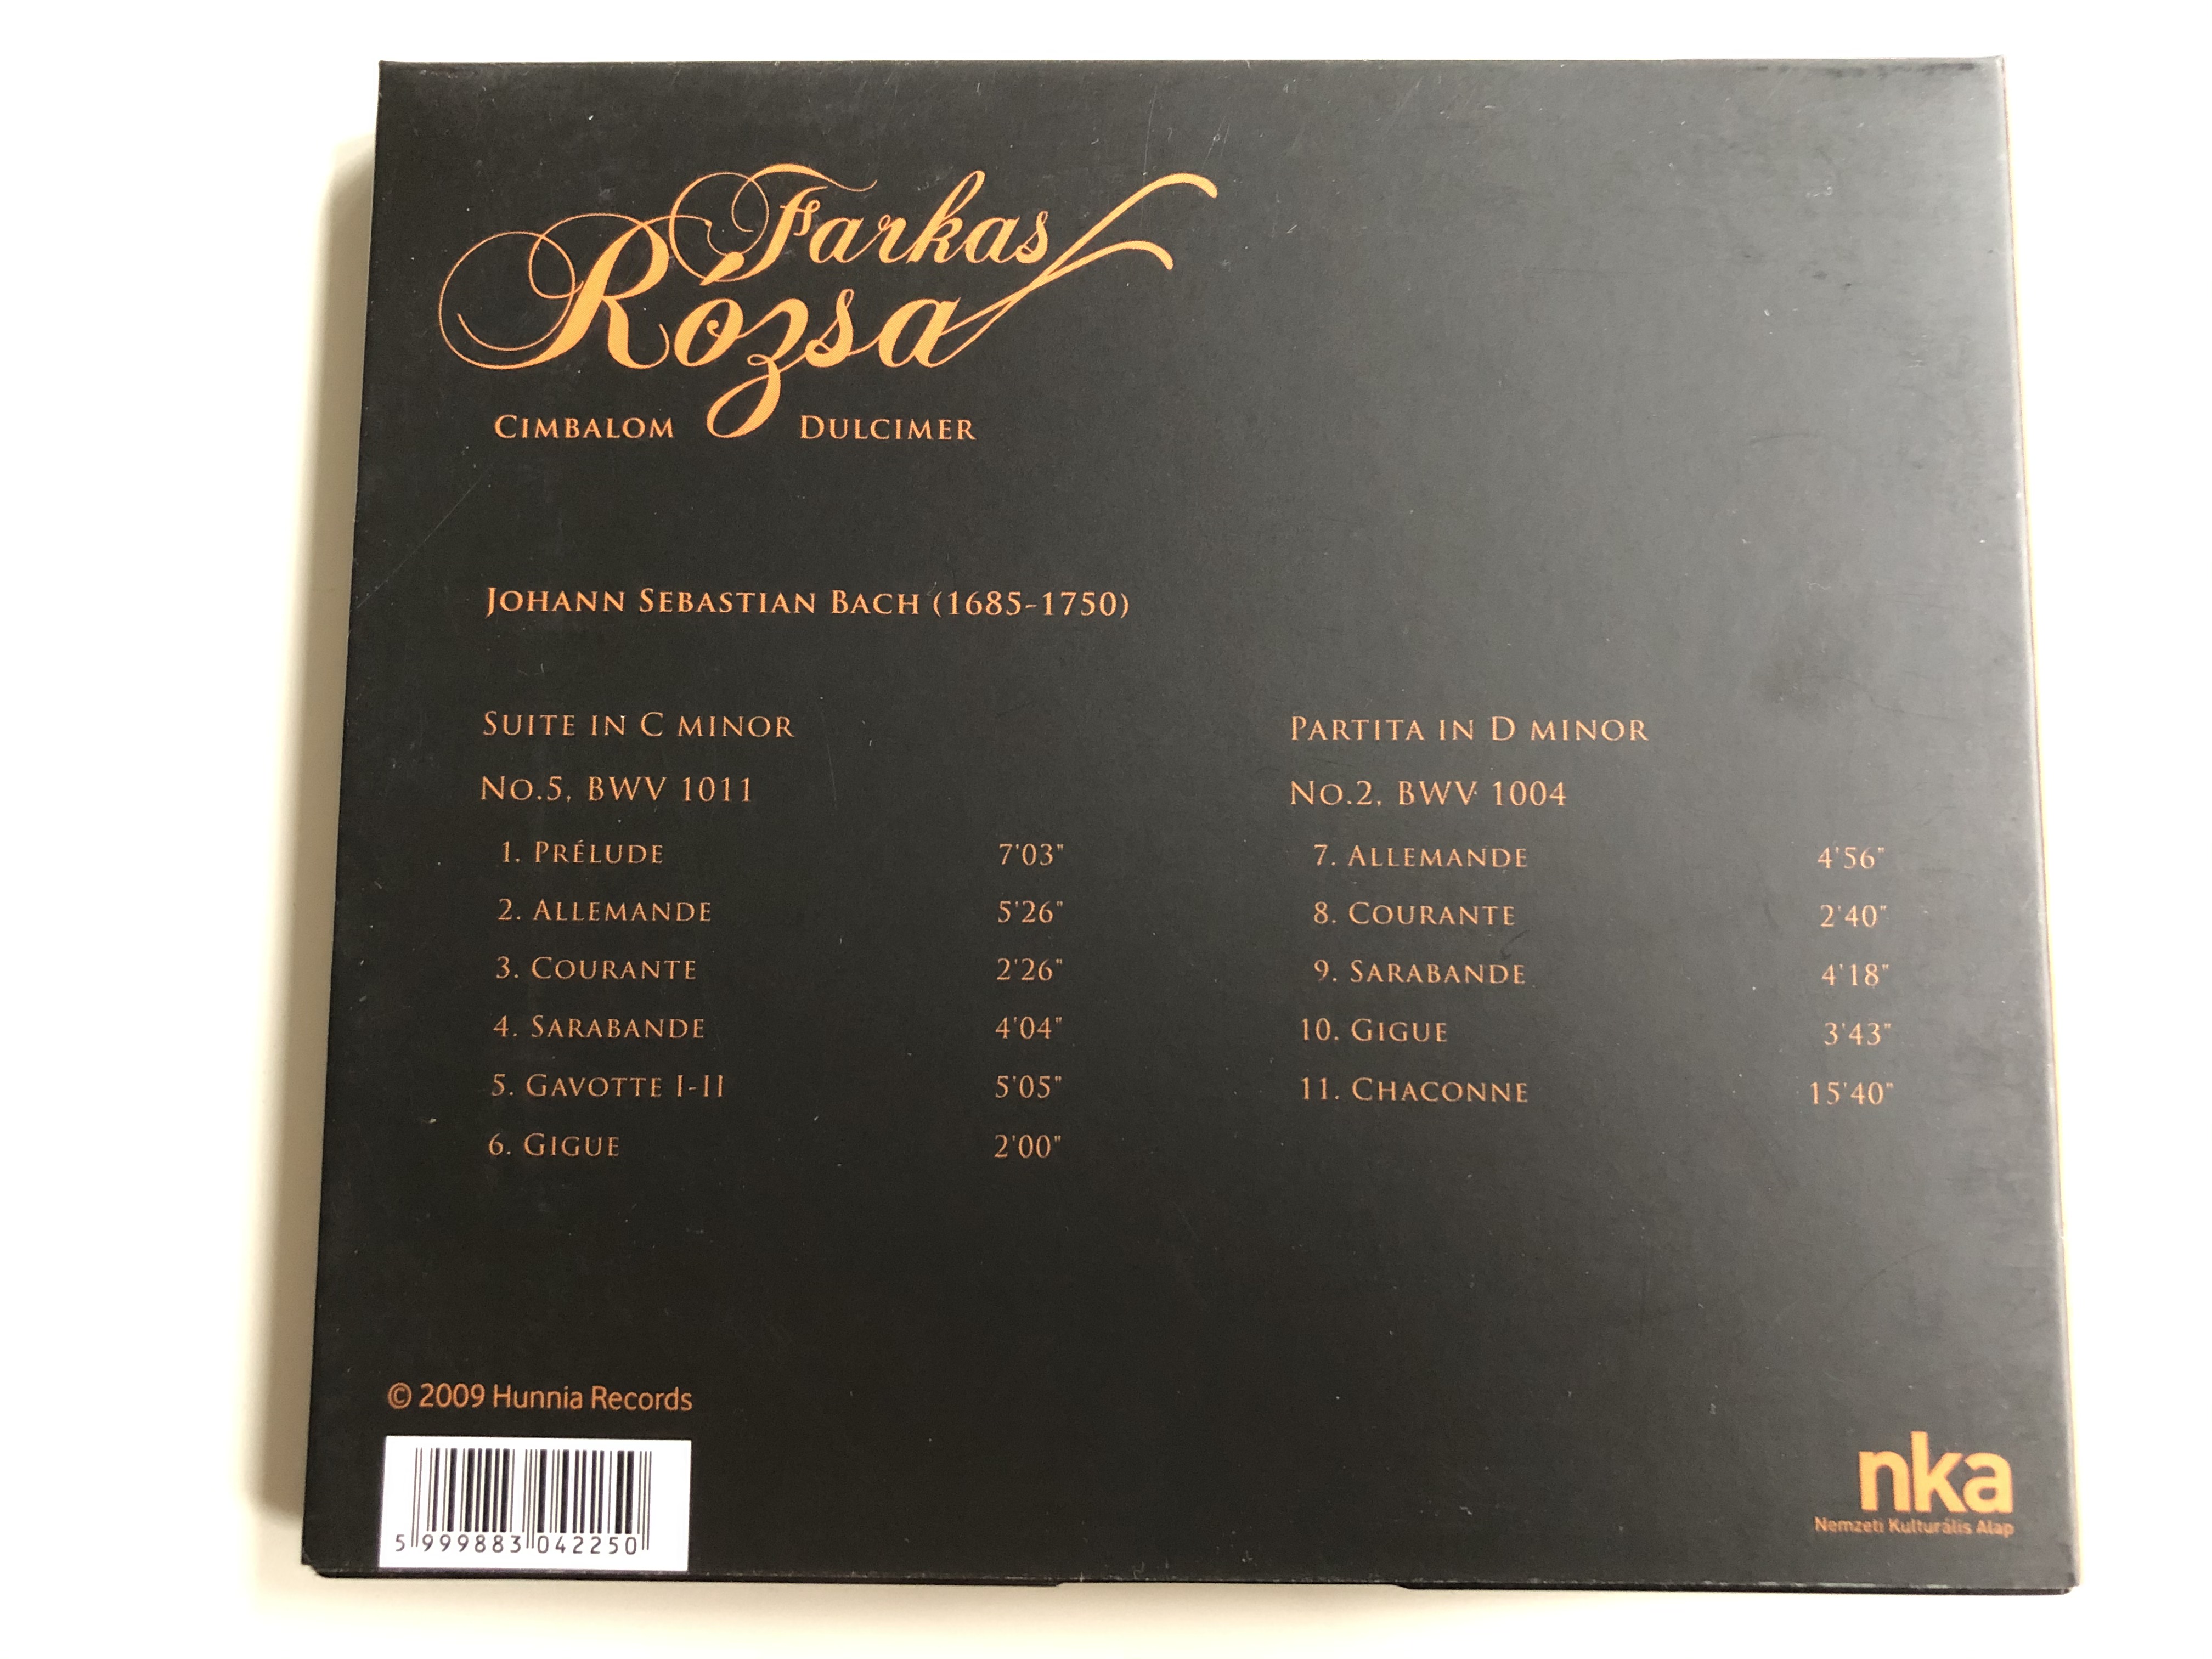 bach-on-133-strings-i-farkas-rozsa-hunnia-records-audio-cd-2009-hrcd904-8-.jpg